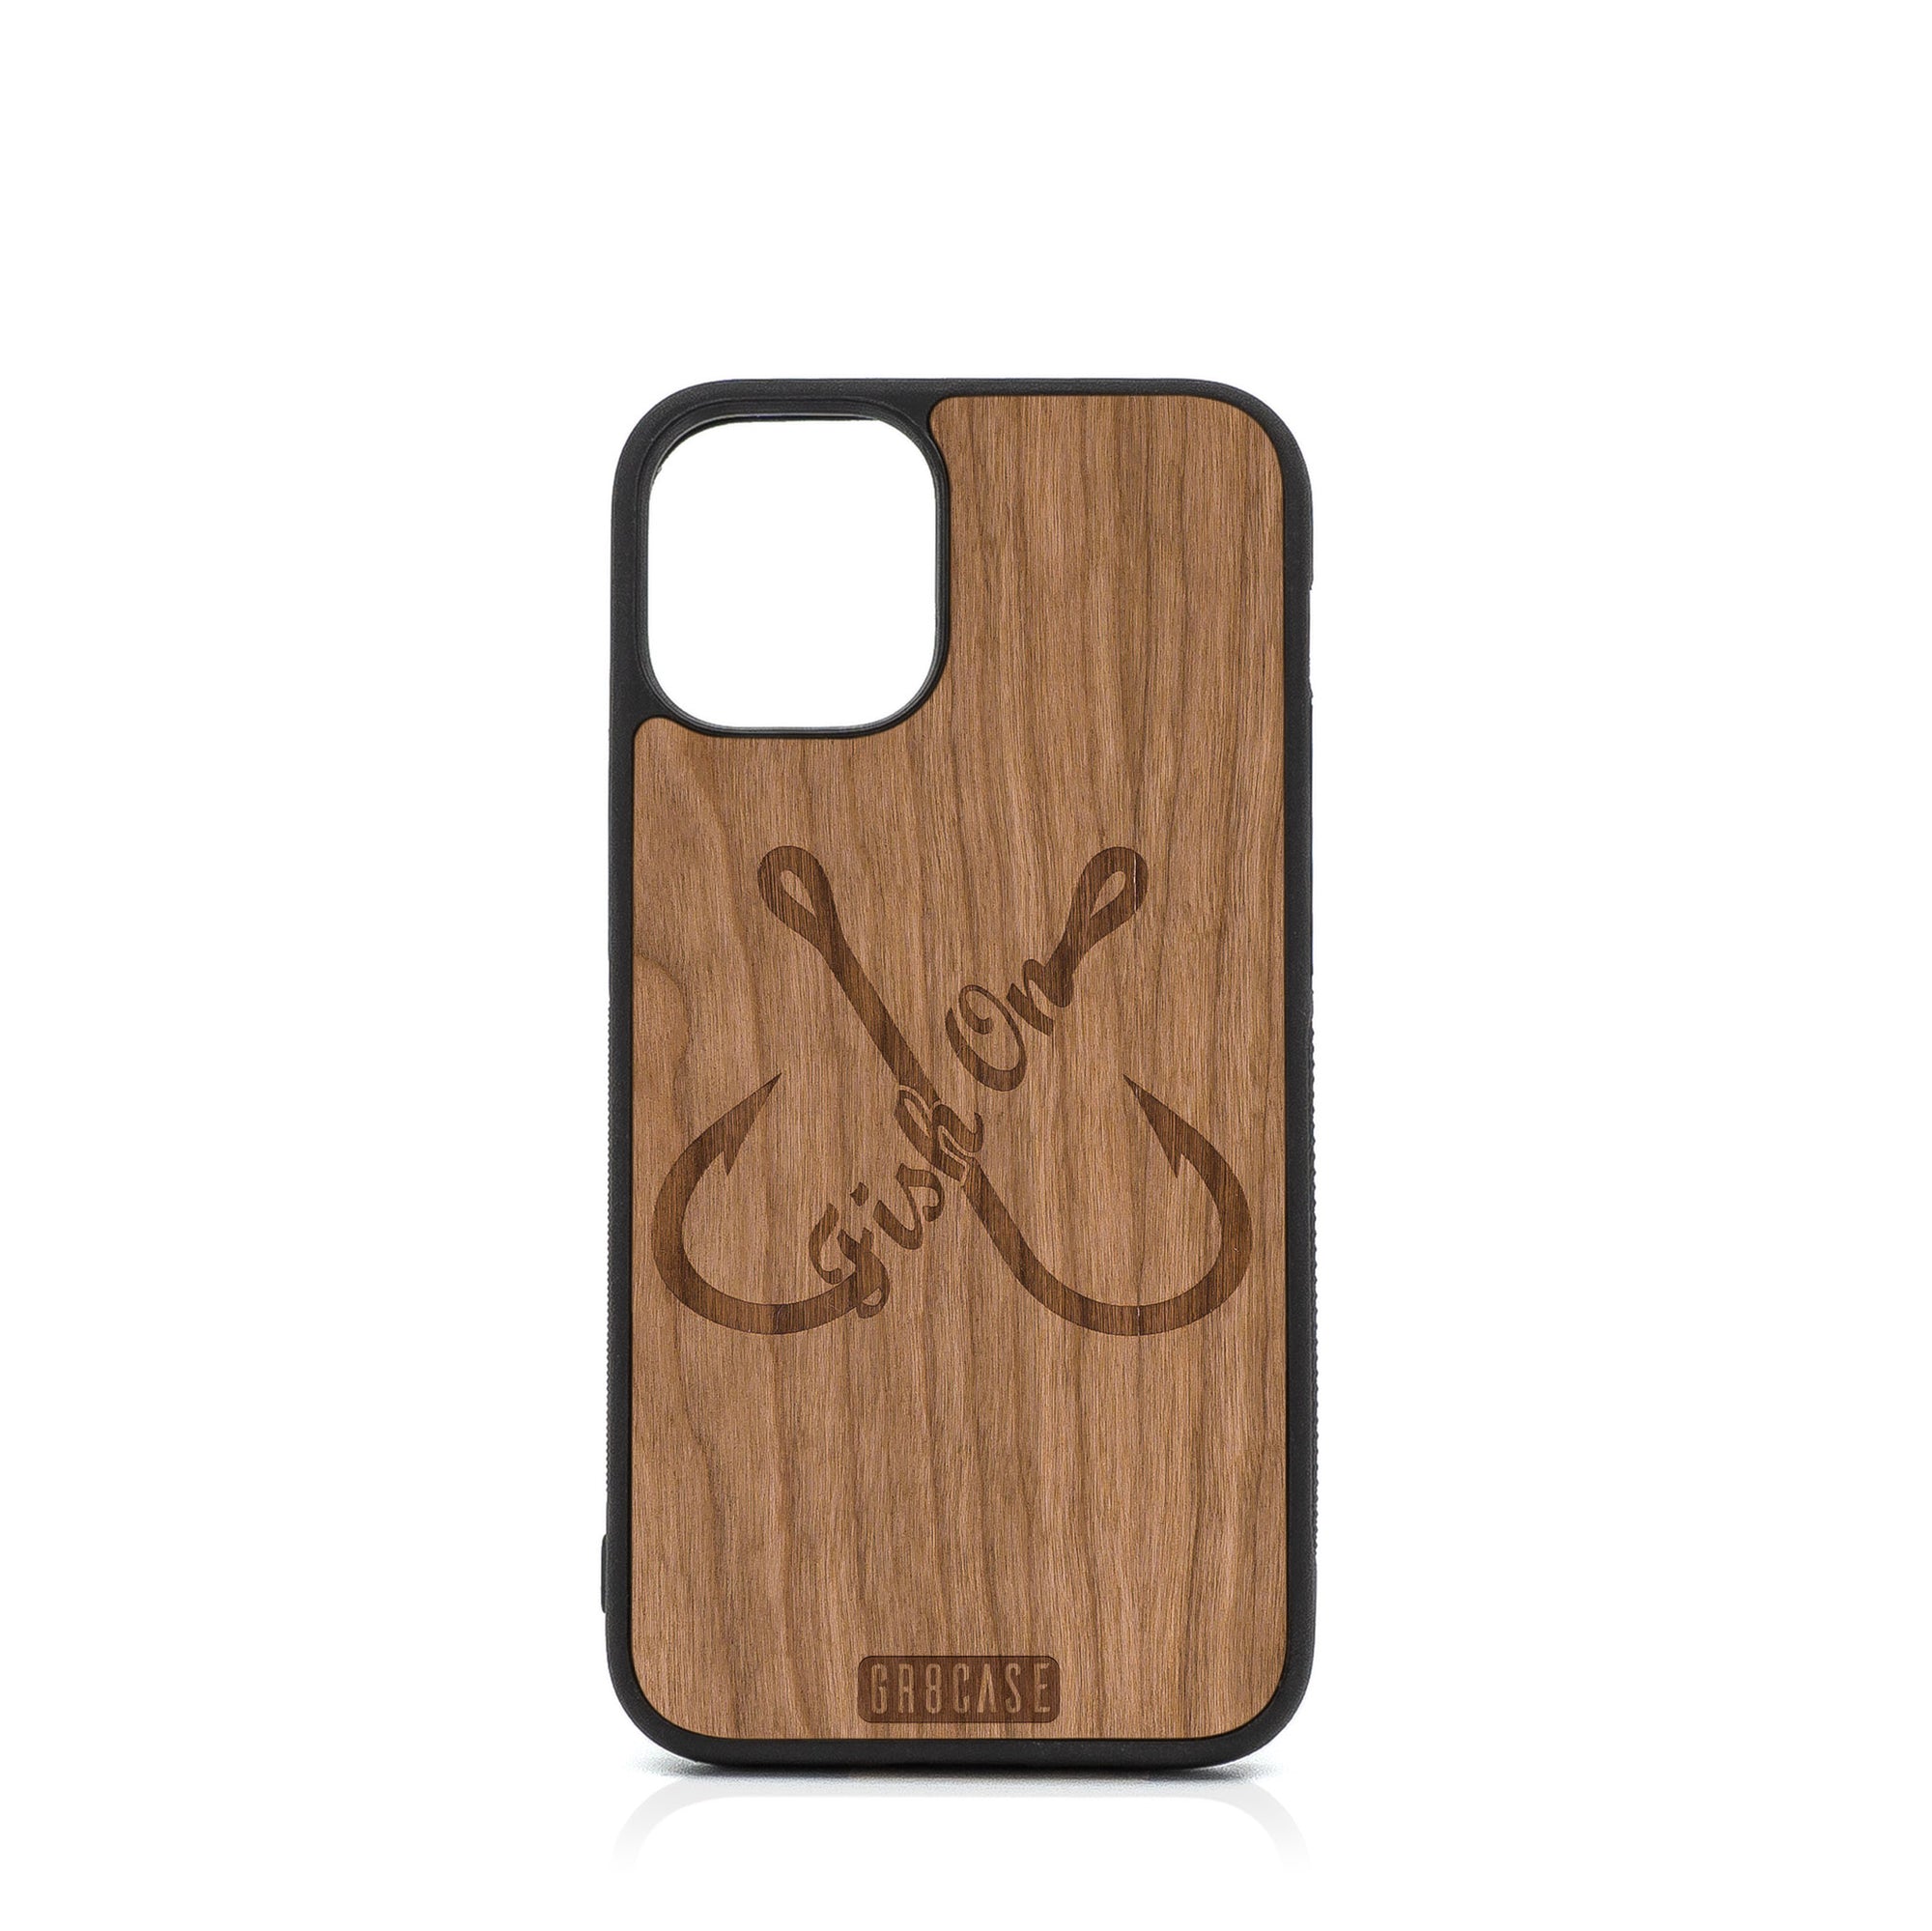 Fish On (Fish Hooks) Design Wood Case For iPhone 12 Mini